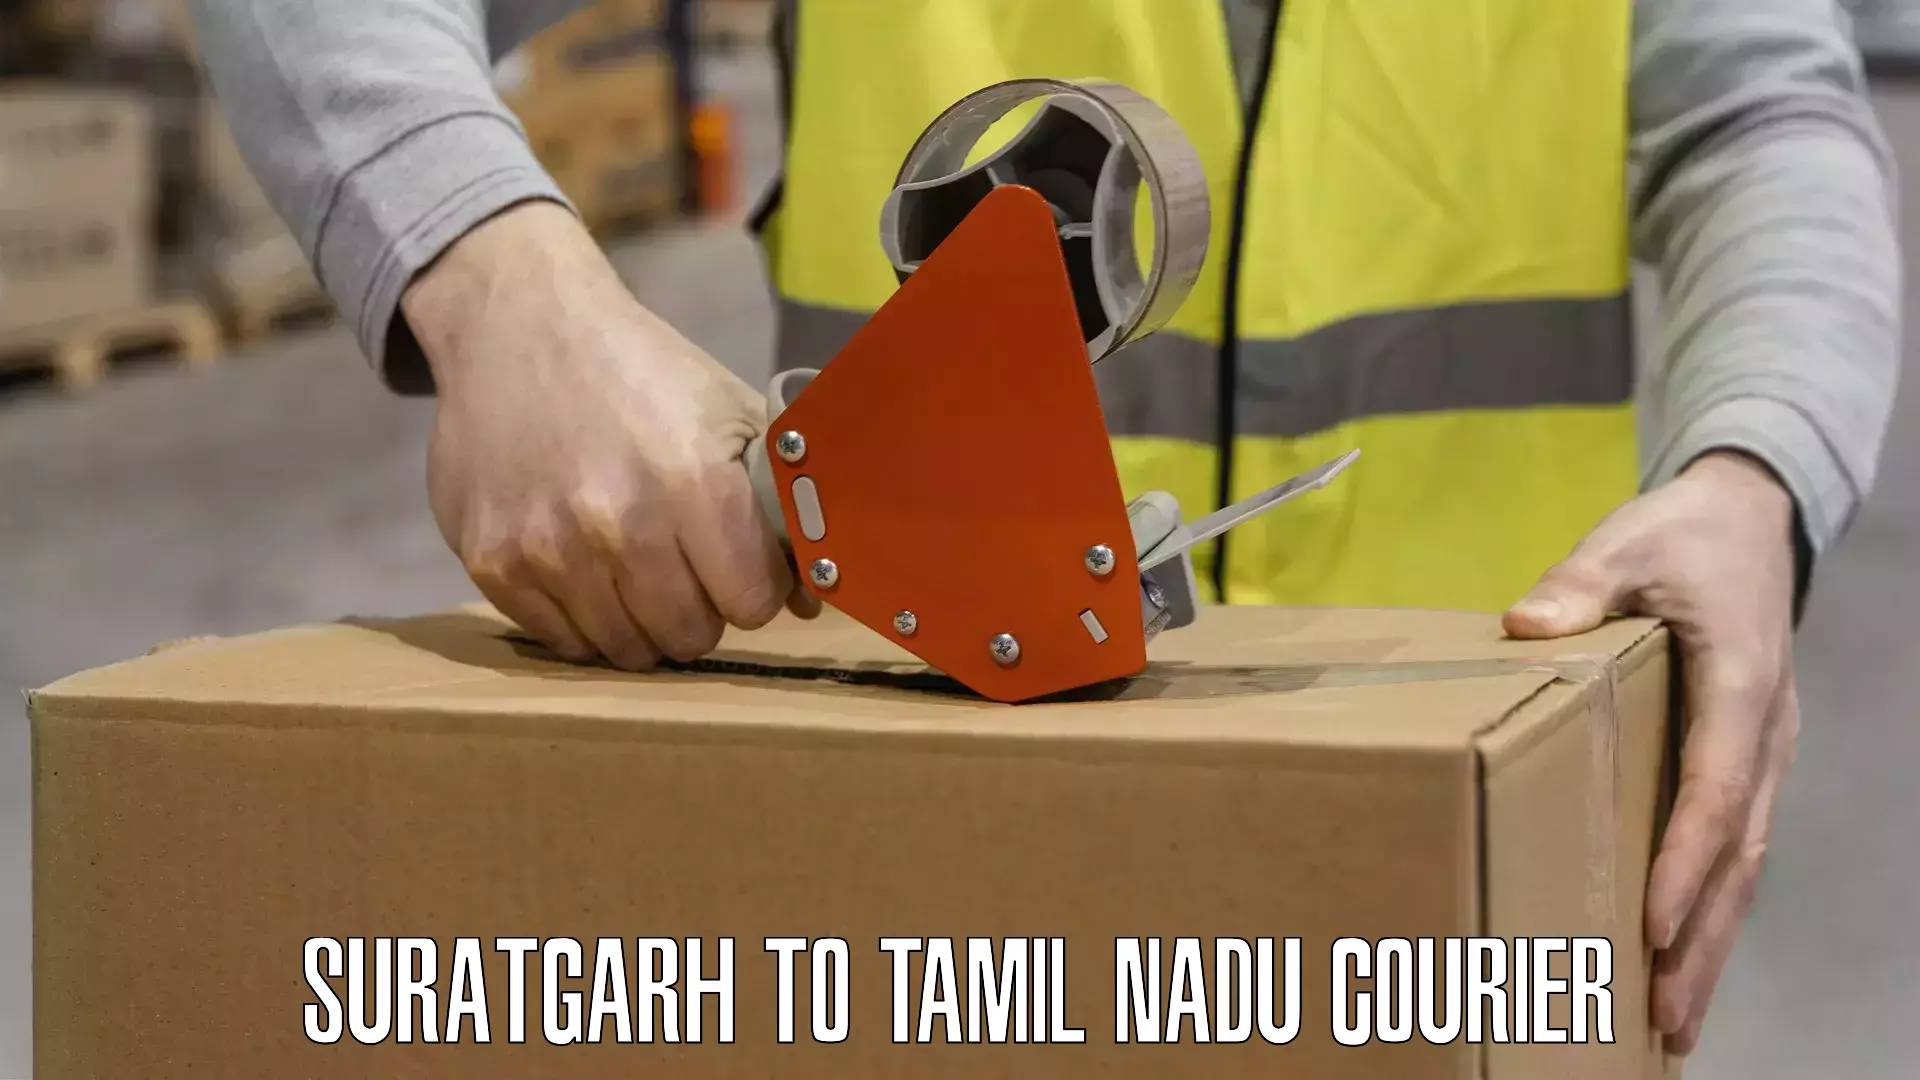 Courier service booking Suratgarh to Chennai